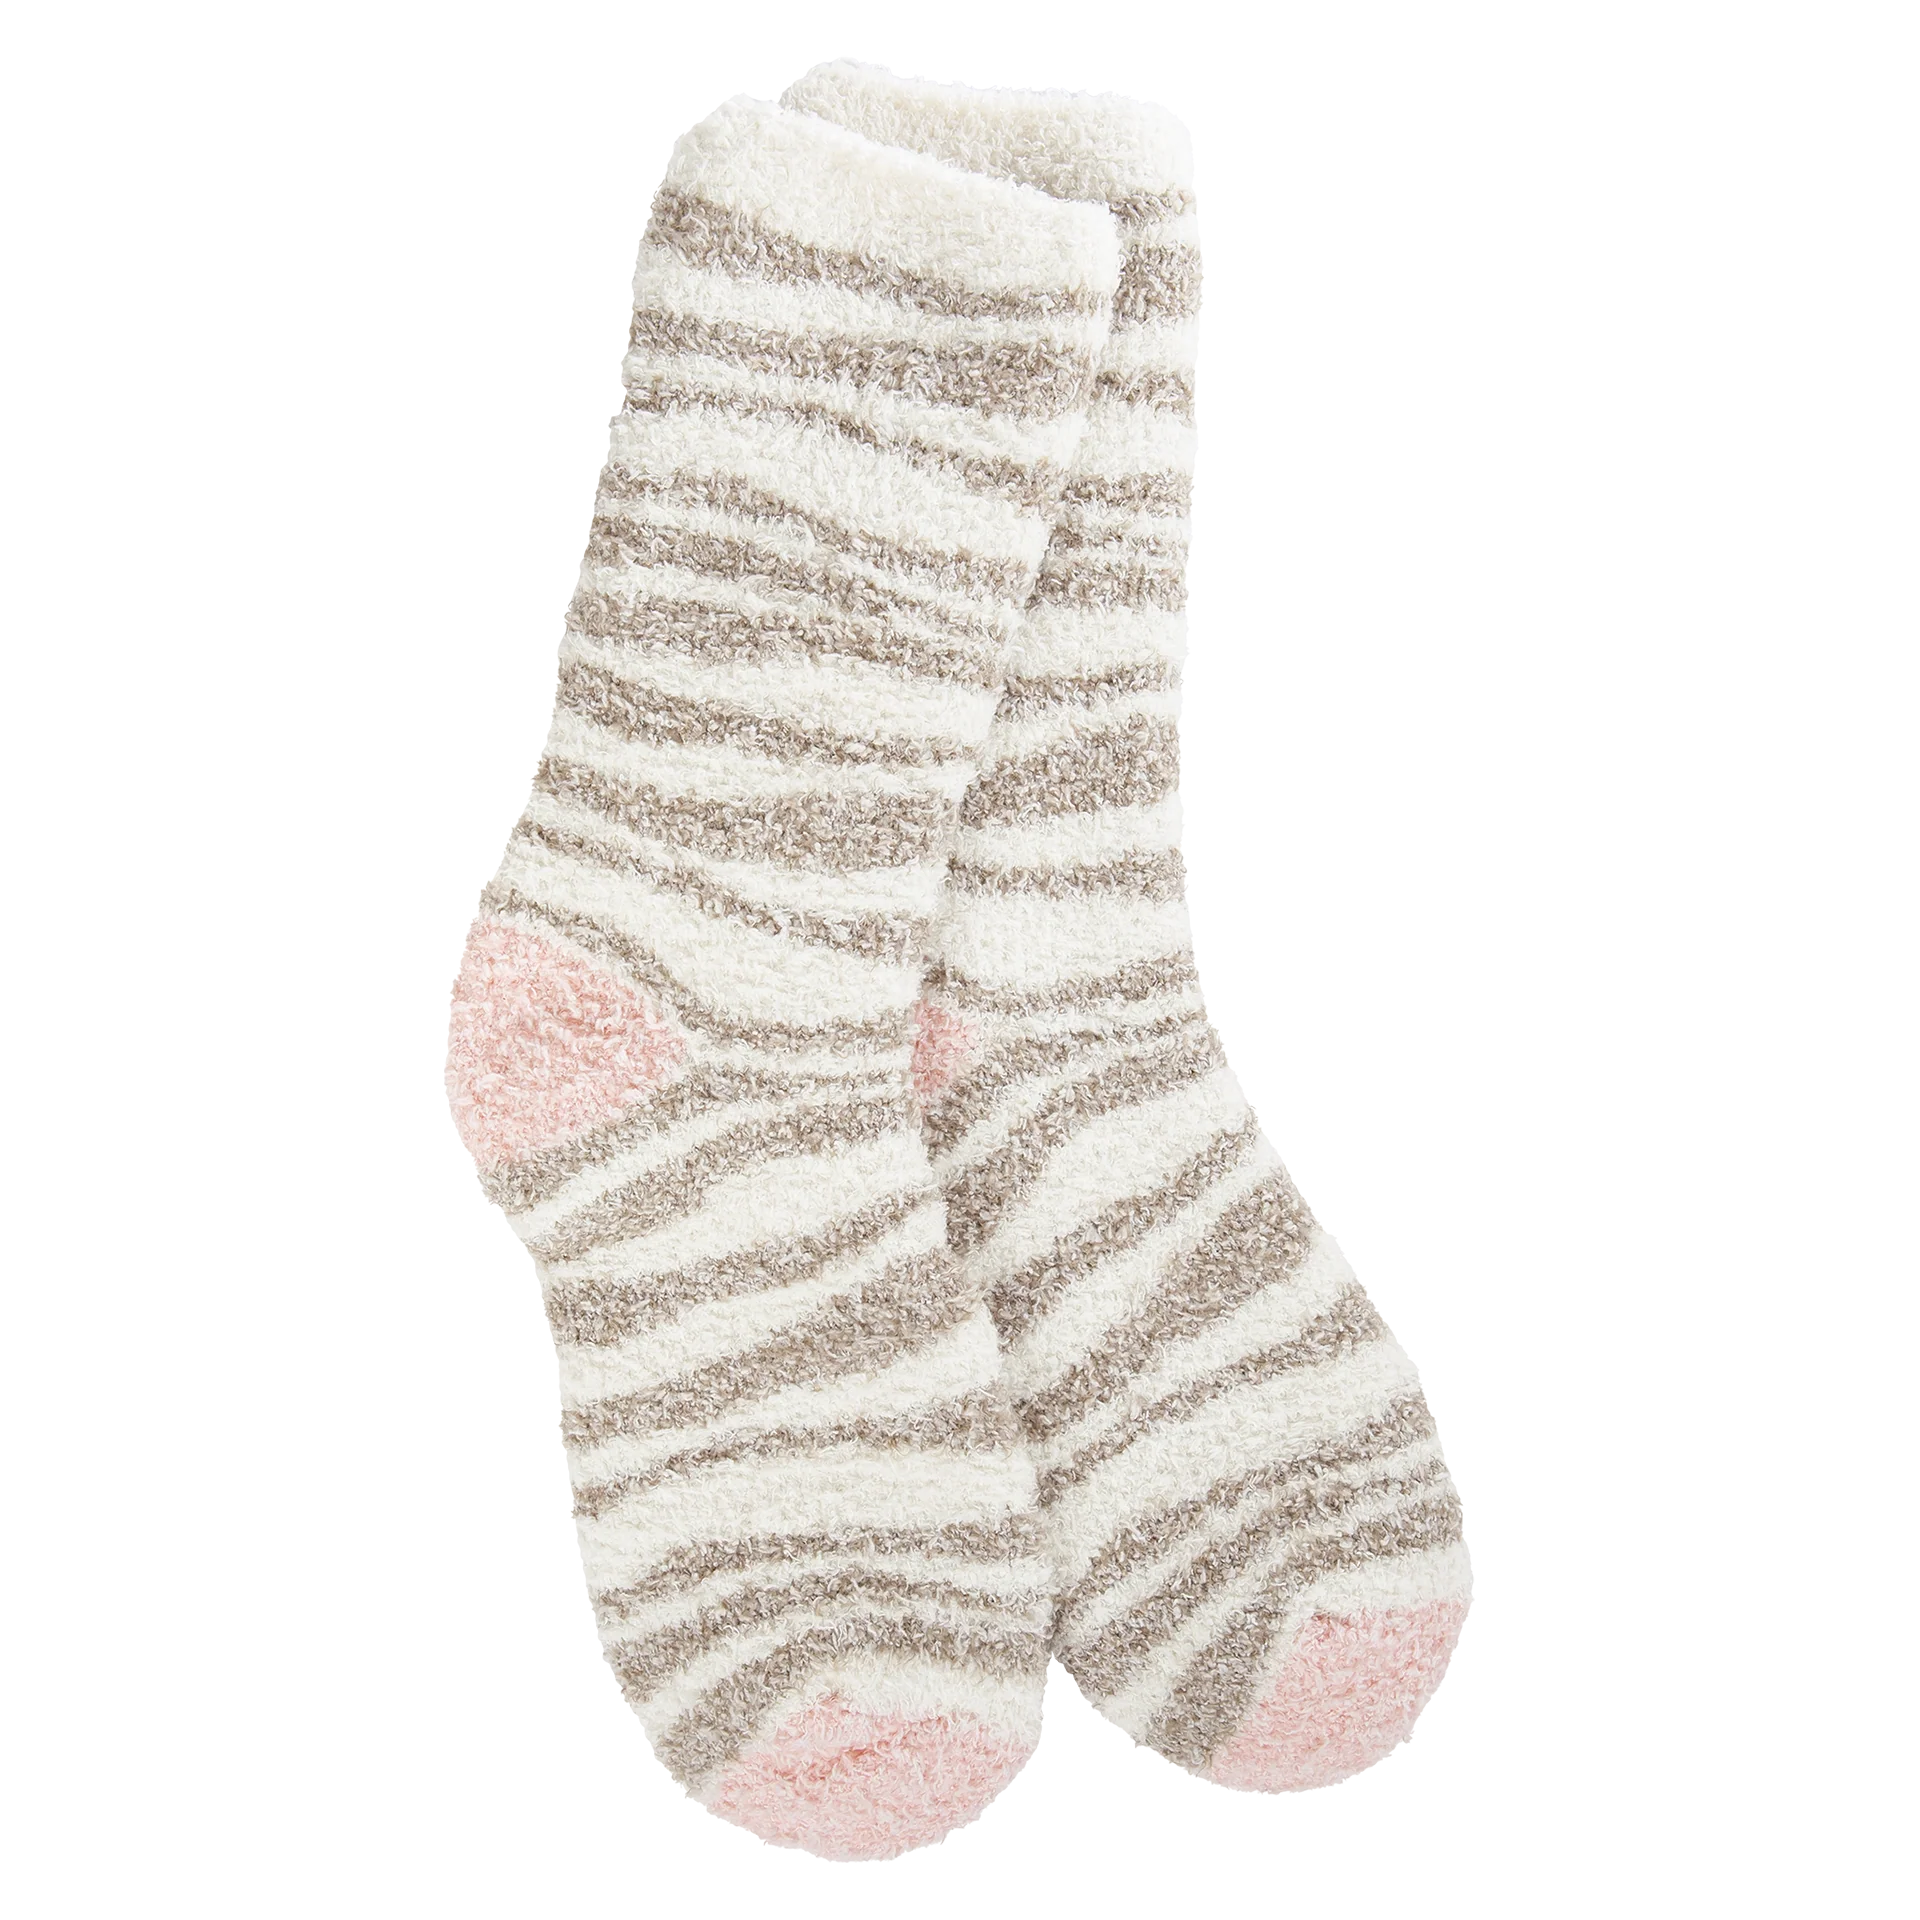 Soft & Cozy Neutral Zebra Socks